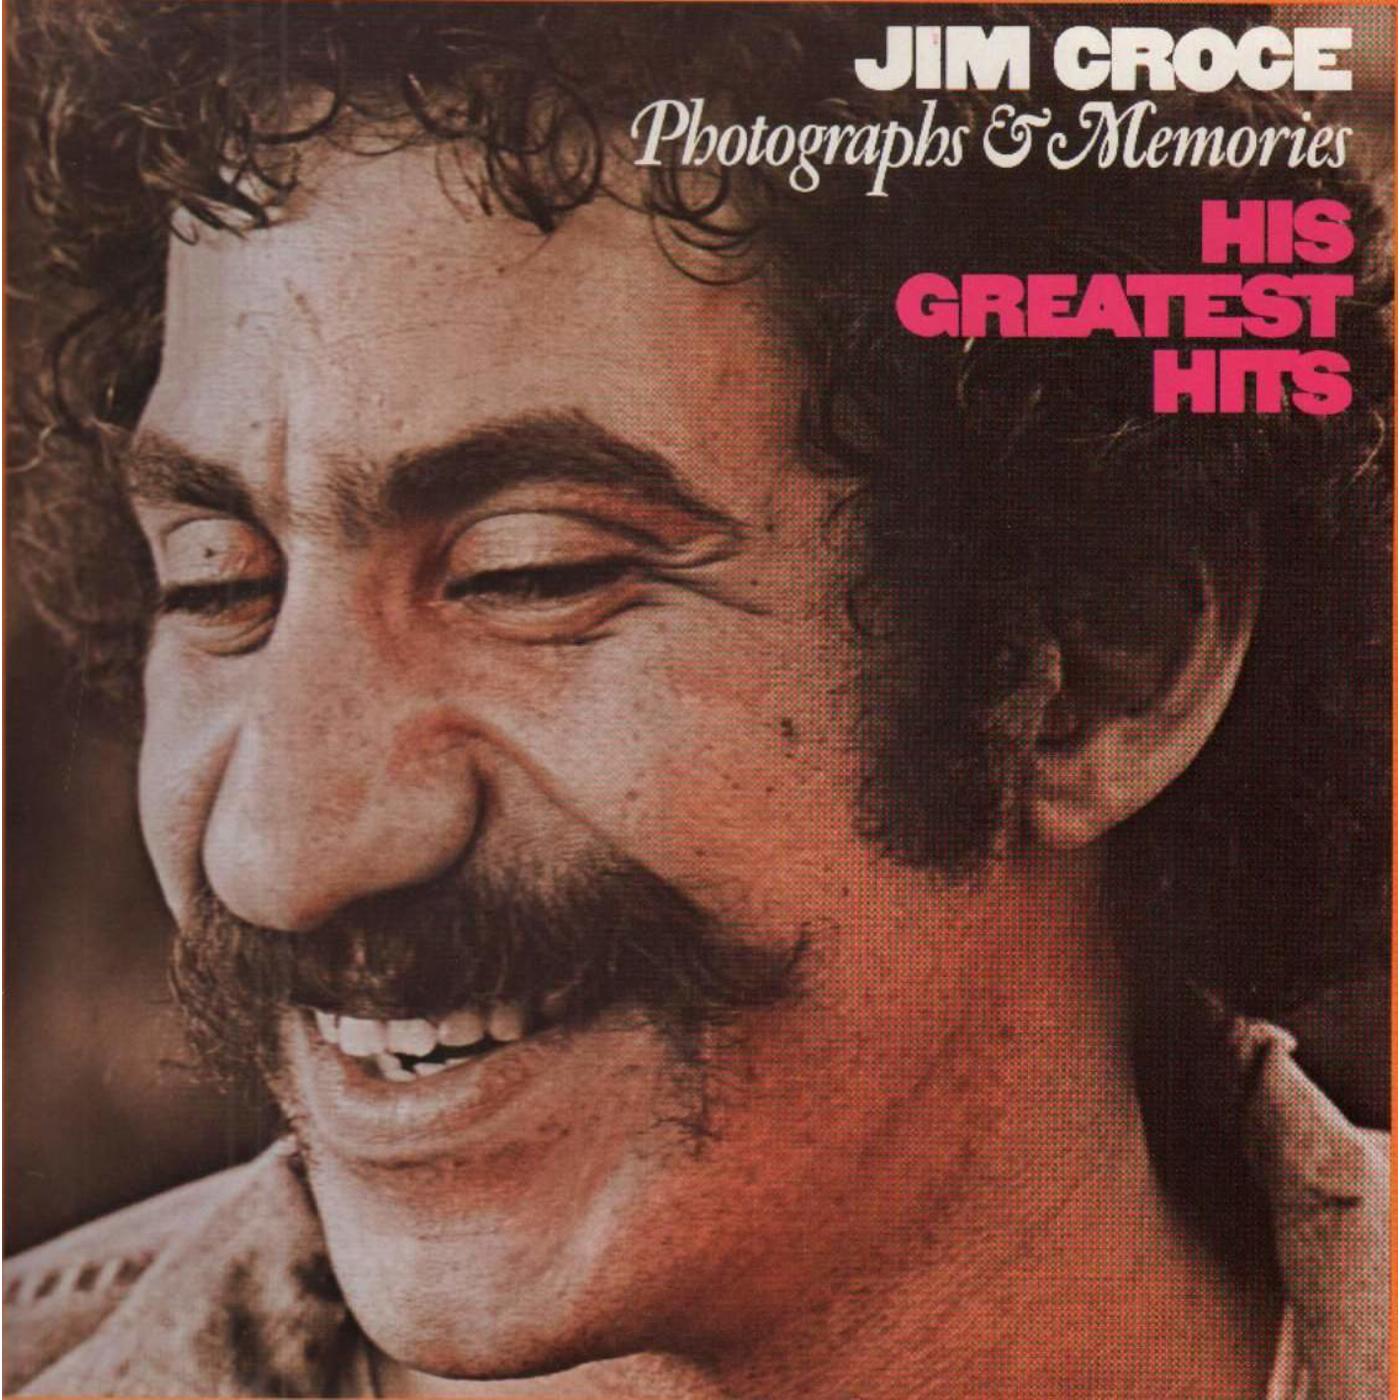 Jim Croce ‎ - Photograph & Memories (His Greatest Hits)